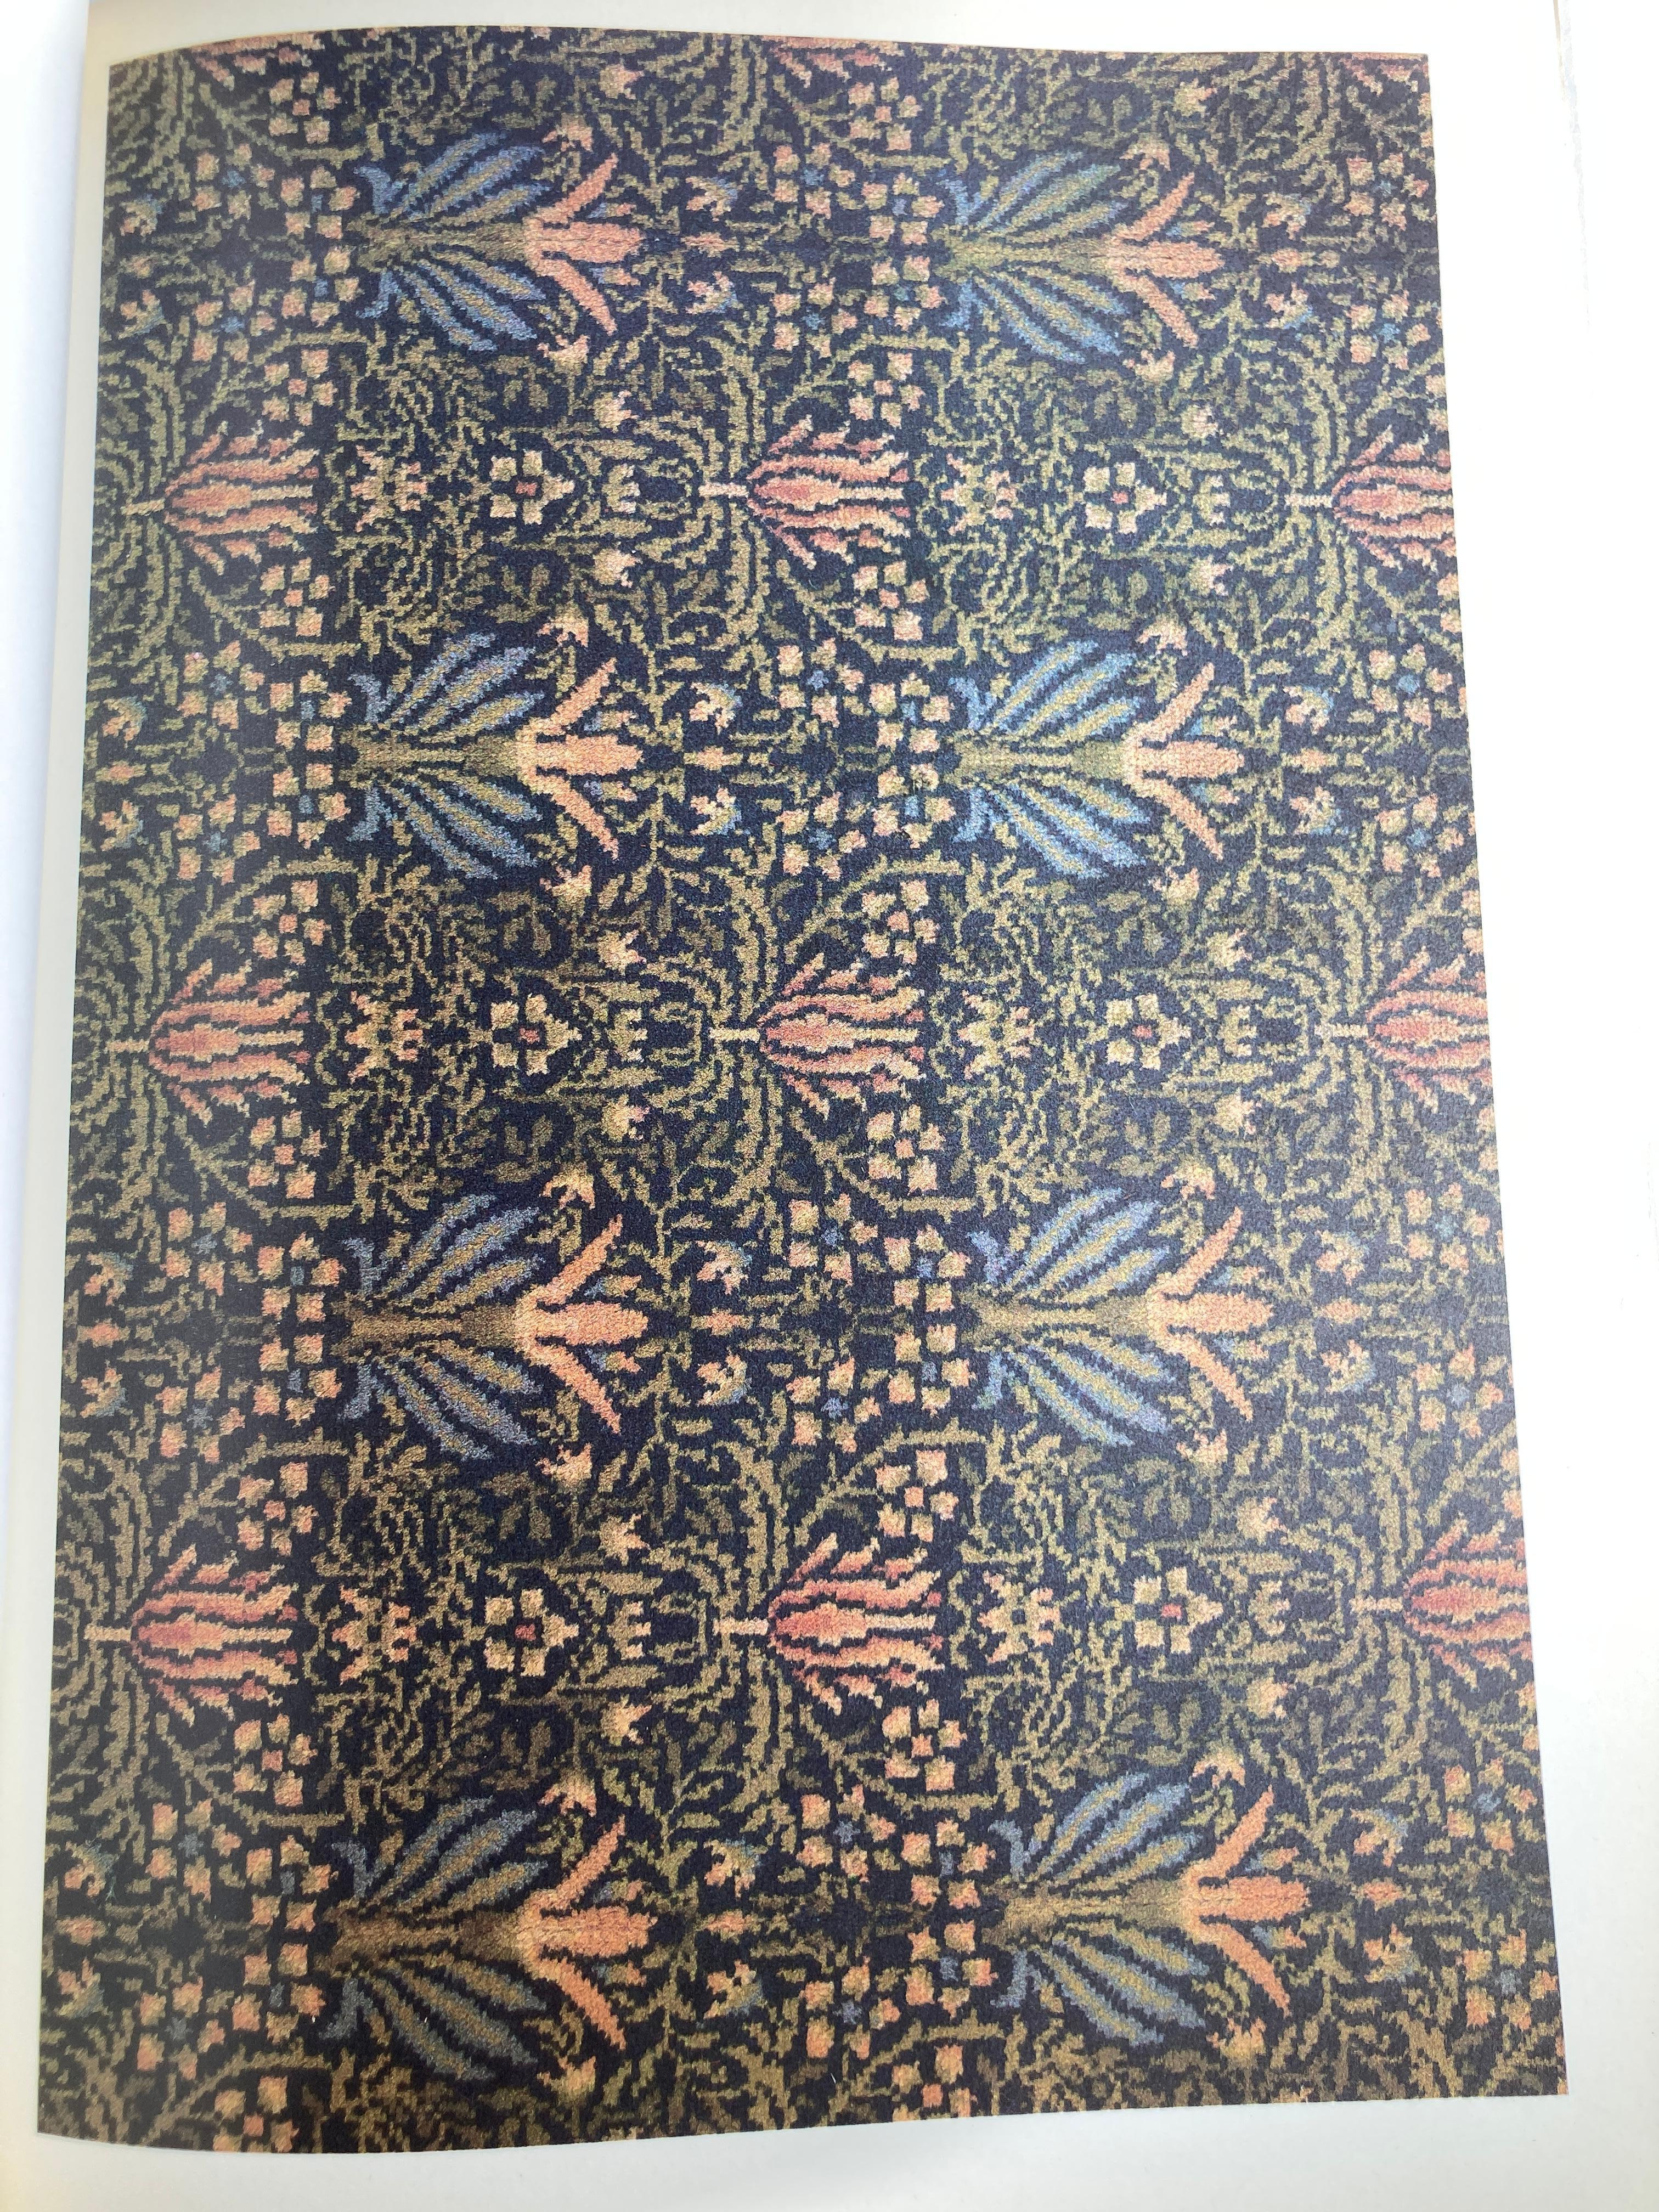 William Morris Full-Color Patterns and Designs Book by William Morris 1